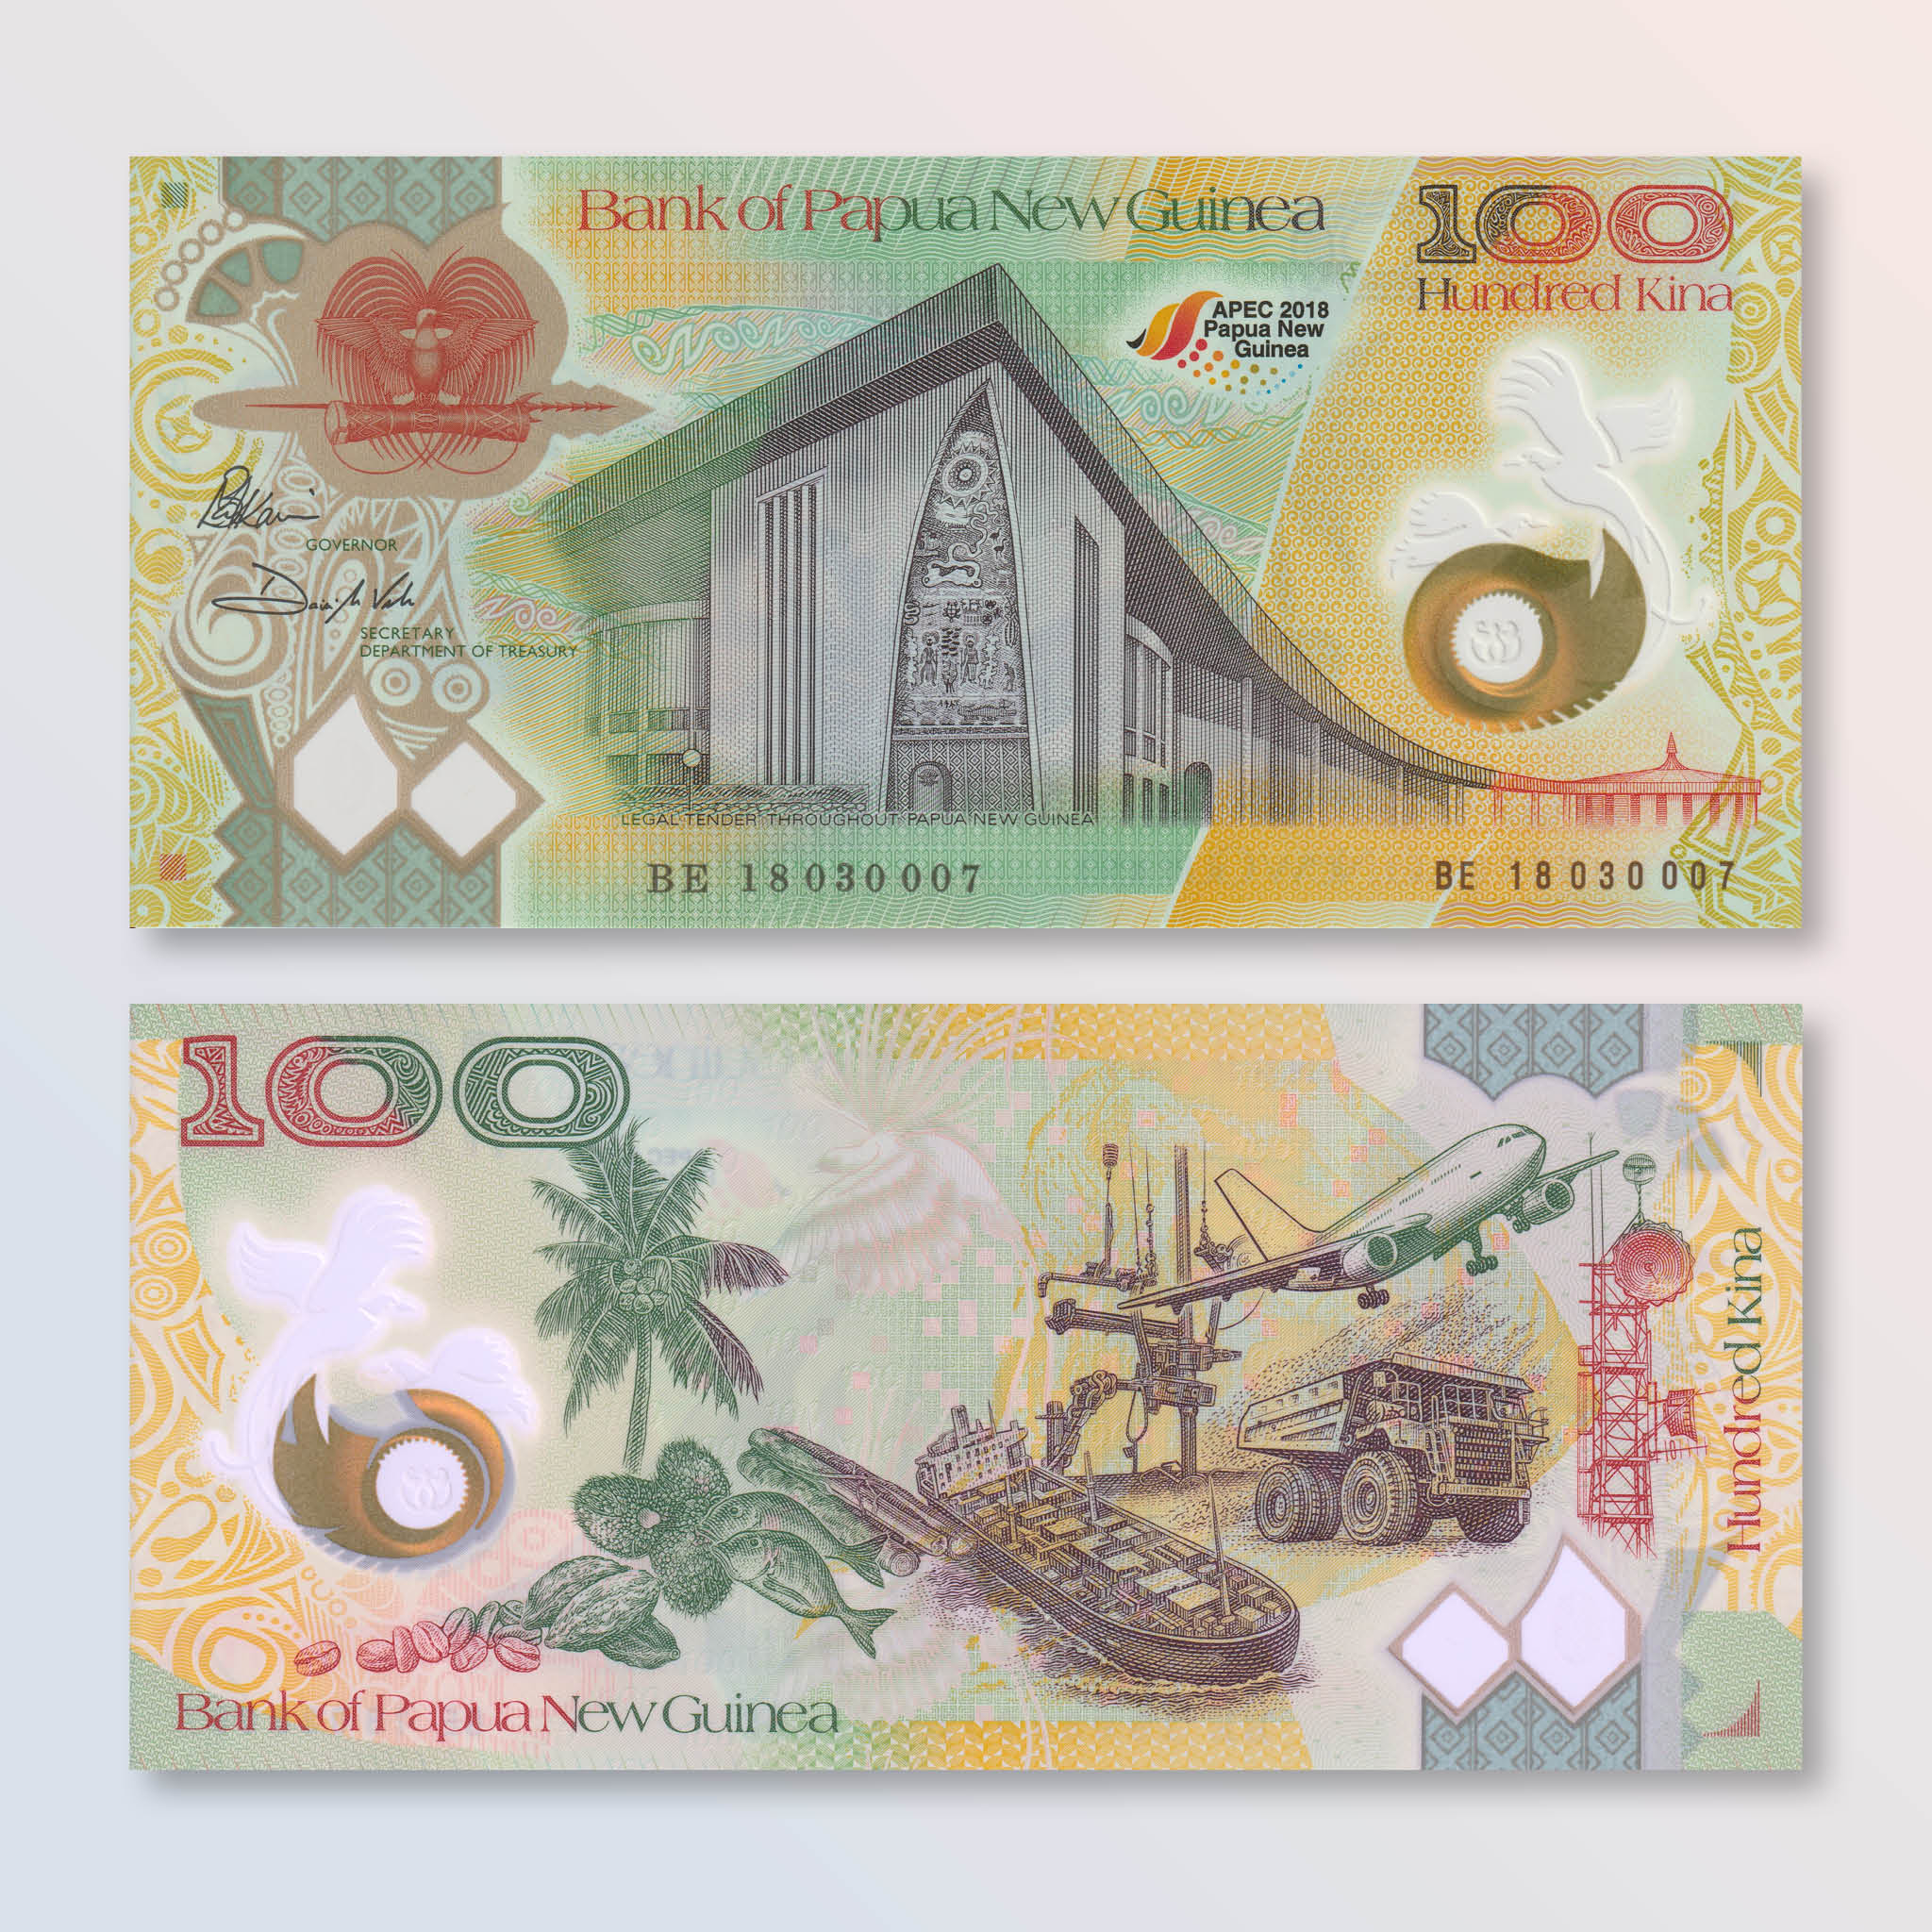 Papua New Guinea 100 Kina, 2018 Commemorative, B160a, UNC - Robert's World Money - World Banknotes